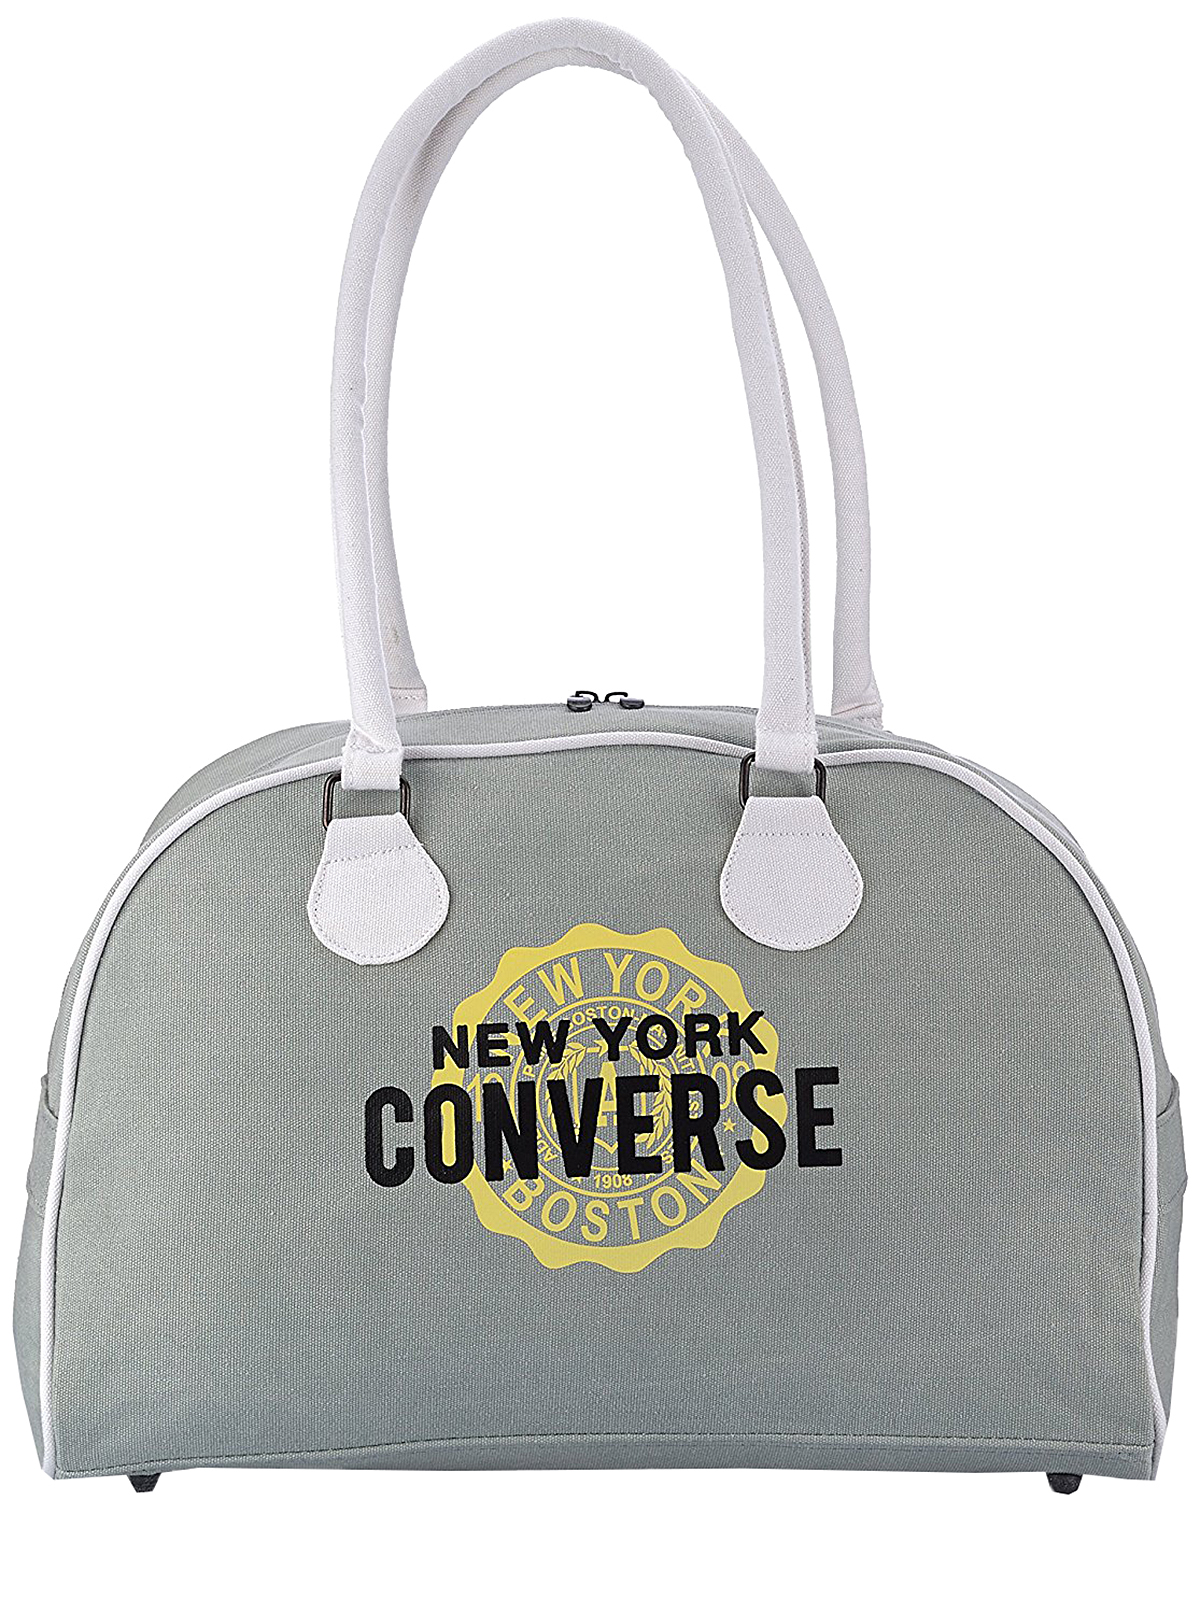 Converse Tasche Bowler Shopper grau Damen Handtasche von Converse